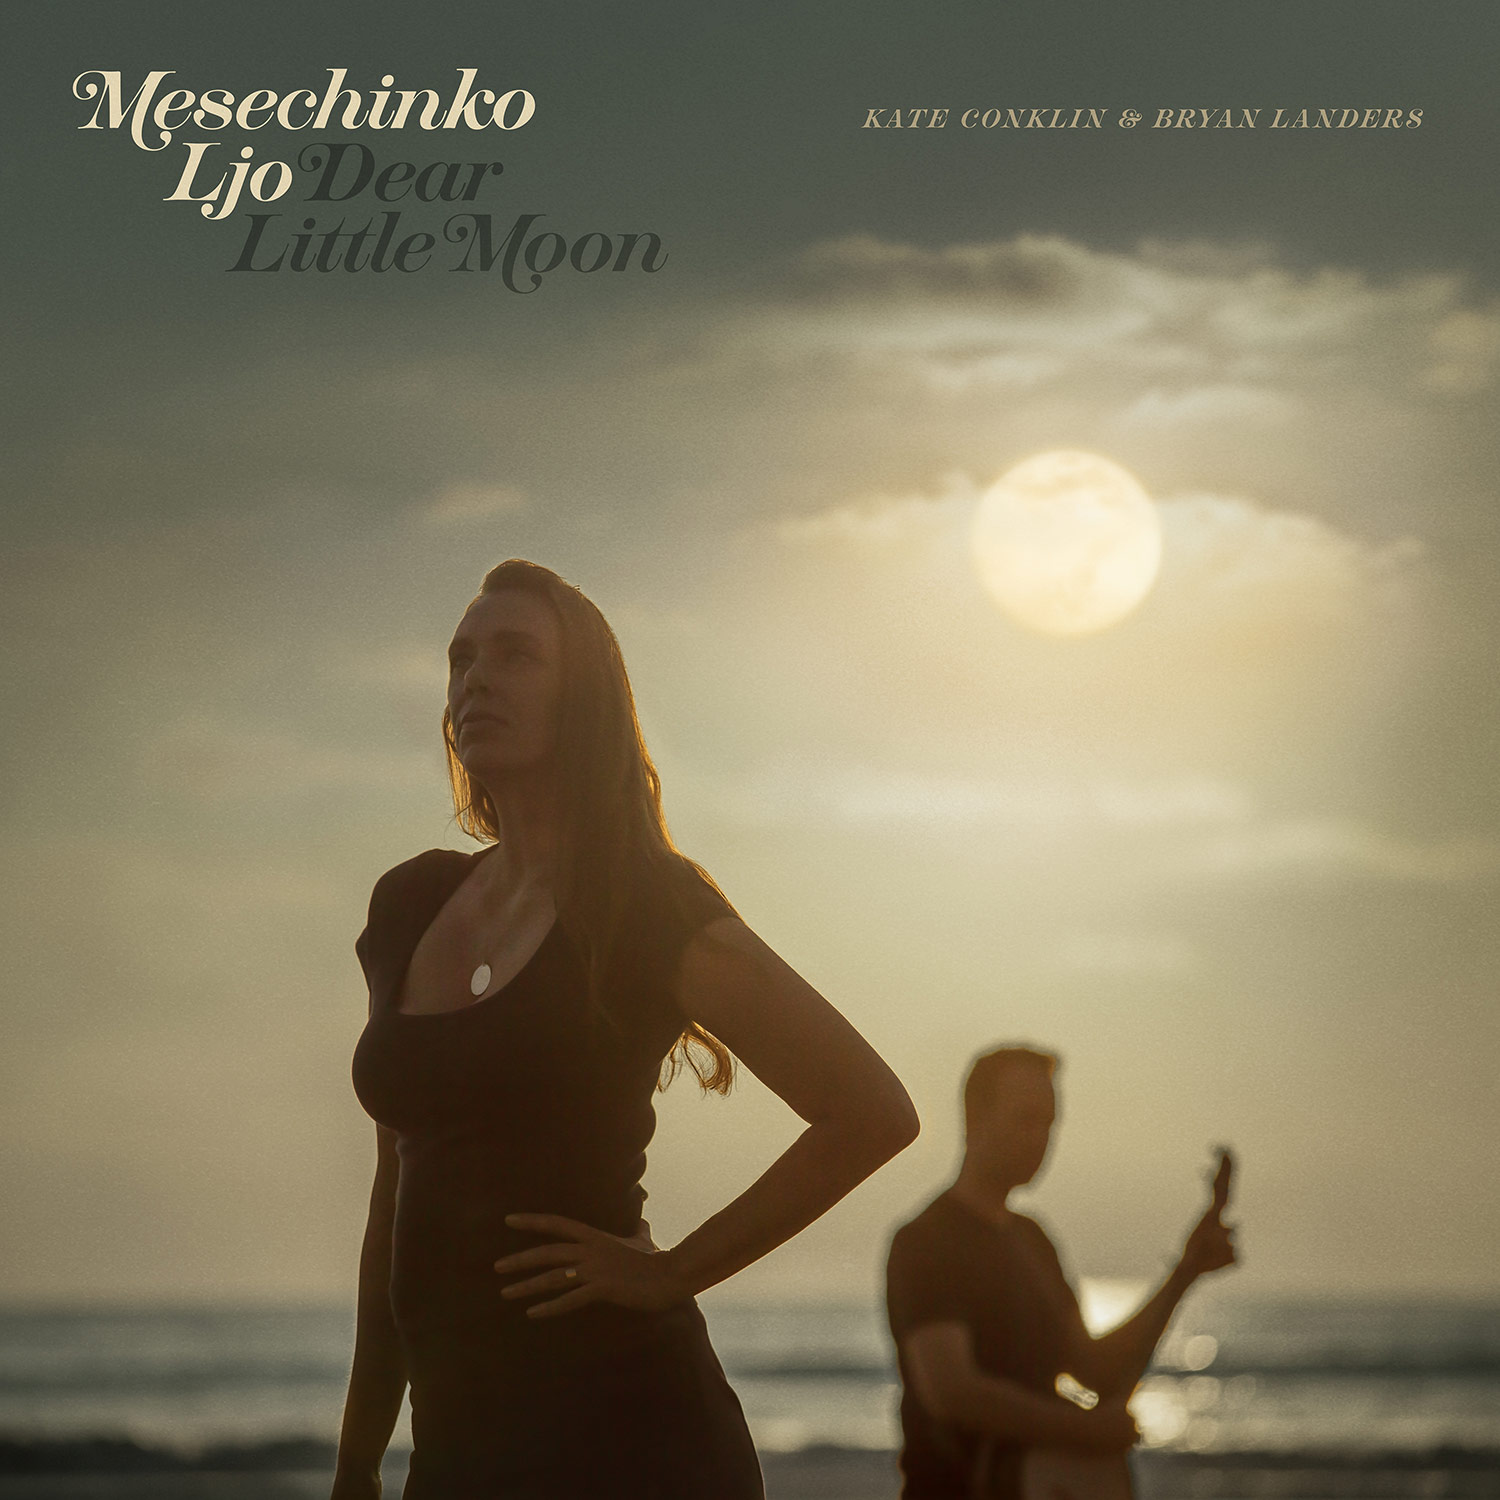 The official cover art for Mesechinko Ljo or Dear Little Moon.